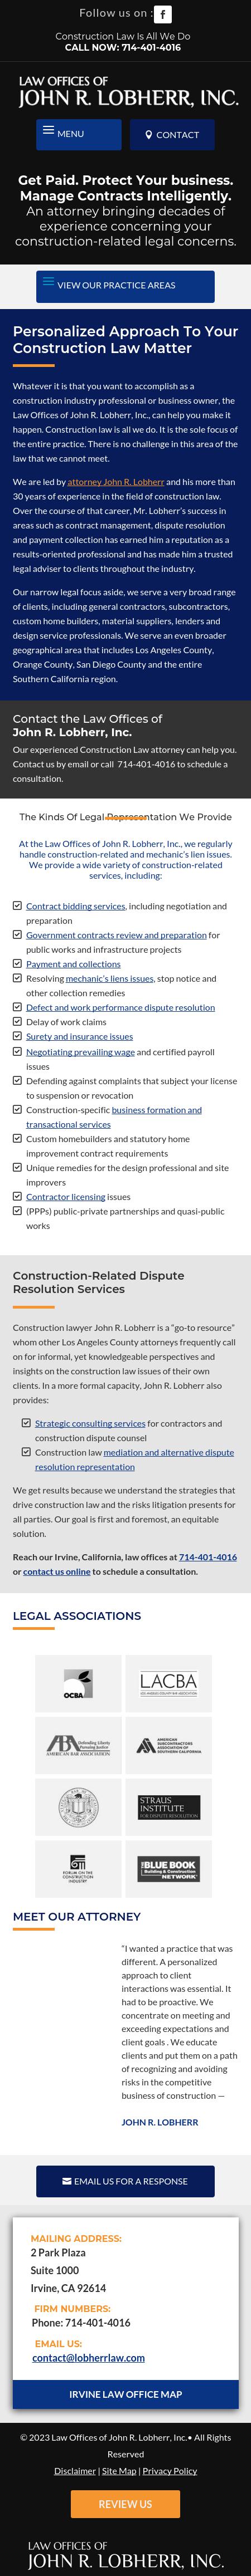 Law Offices of John R. Lobherr, Inc. - Irvine CA Lawyers